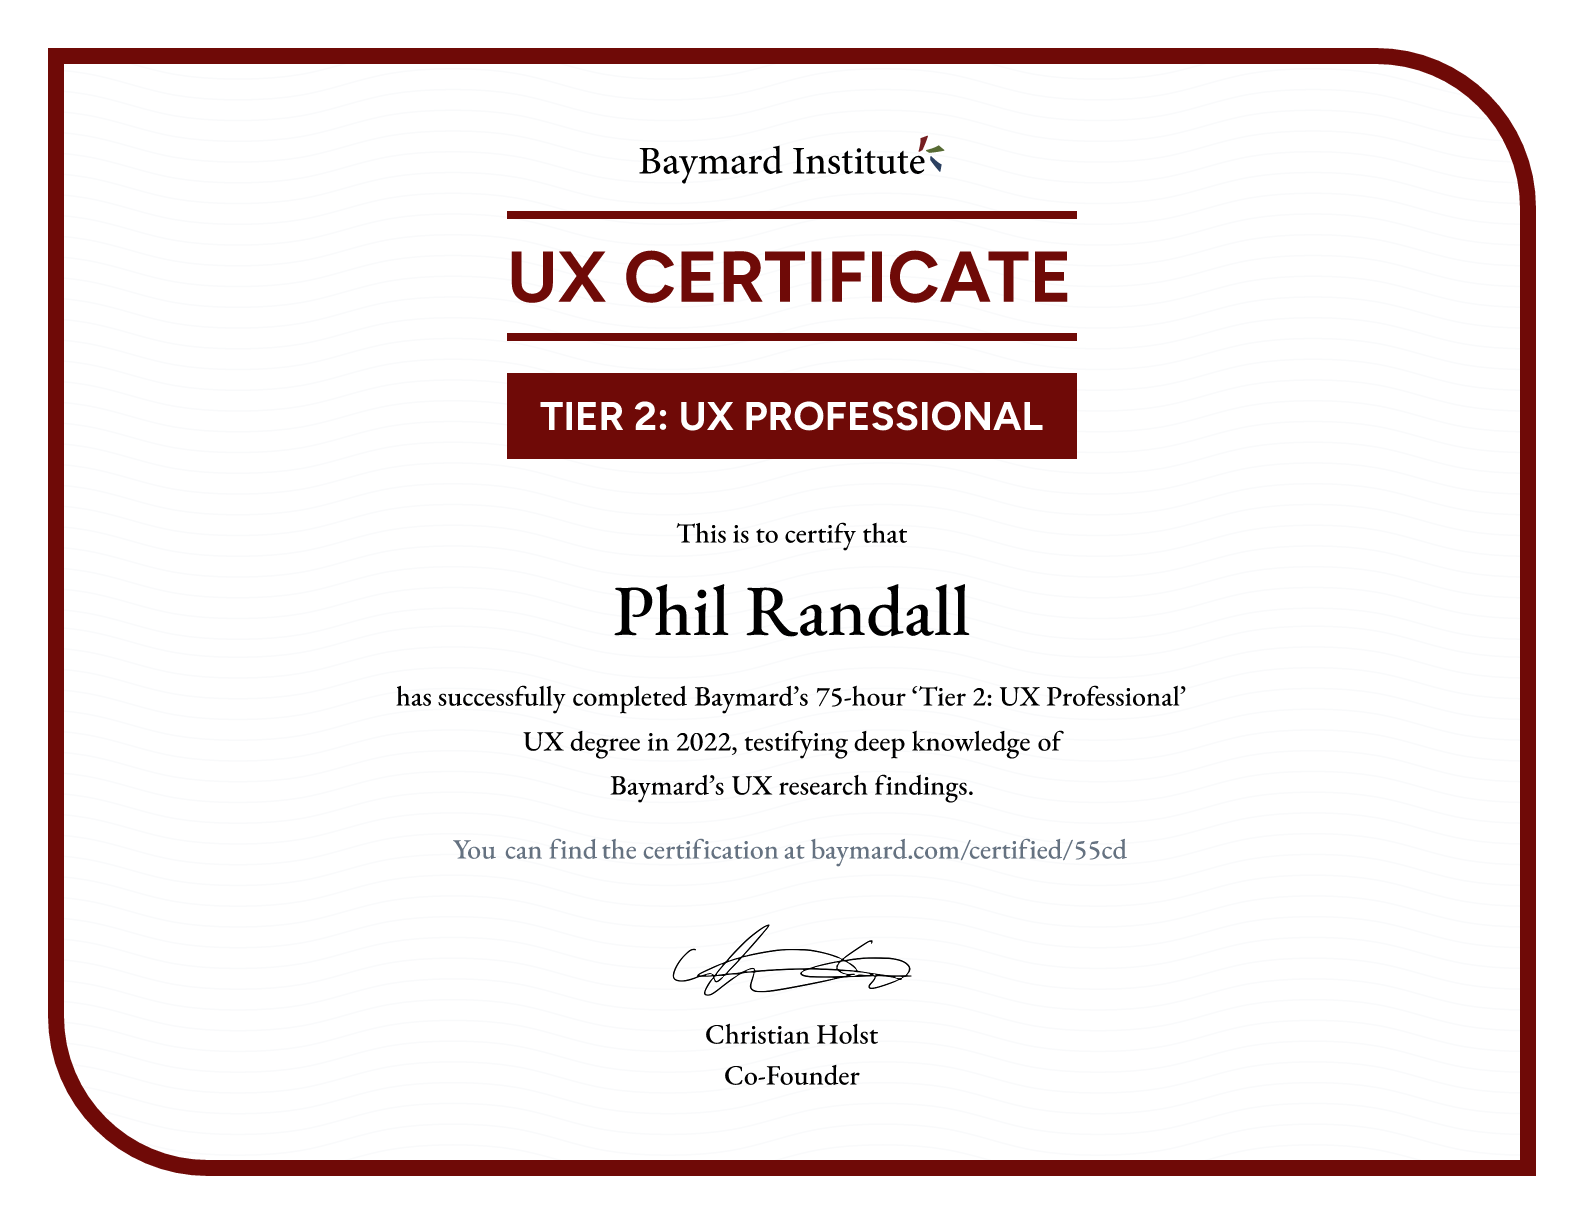 Phil Randall’s certificate